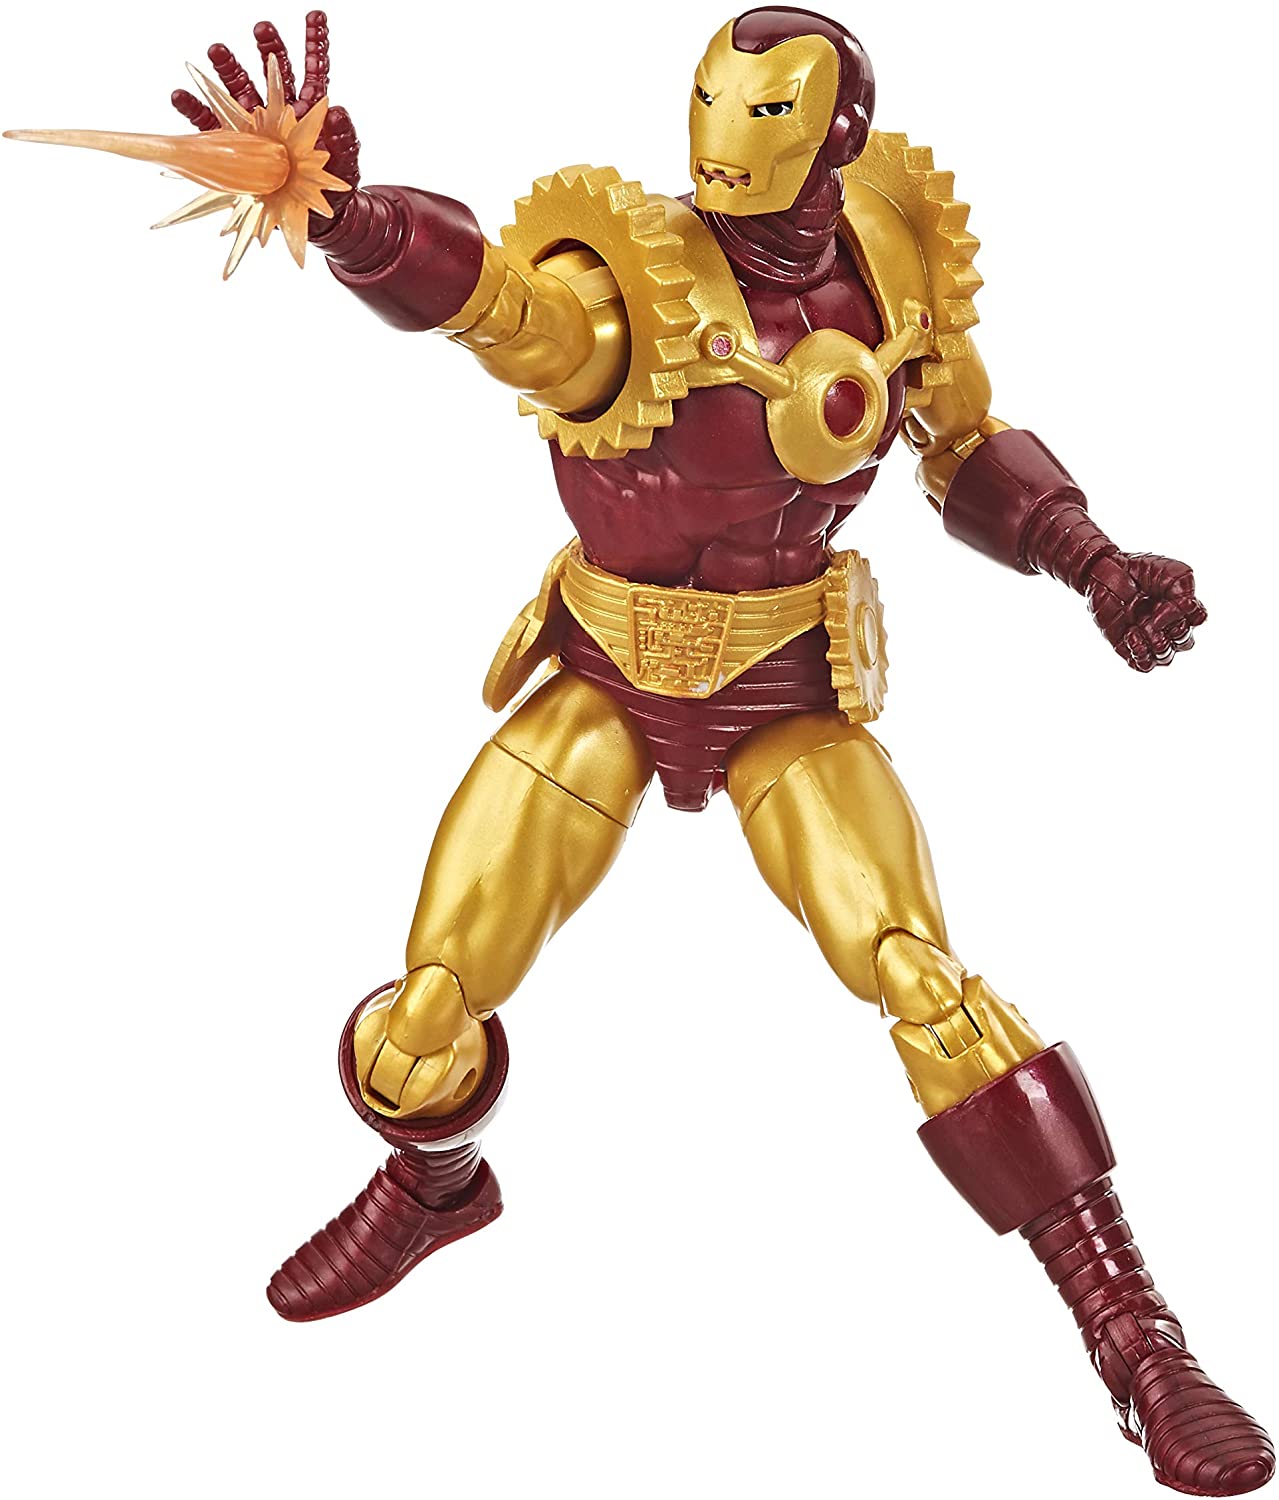 Hasbro Marvel Legends Series Iron Man 2020 - 6 inch figure with hand blast effect